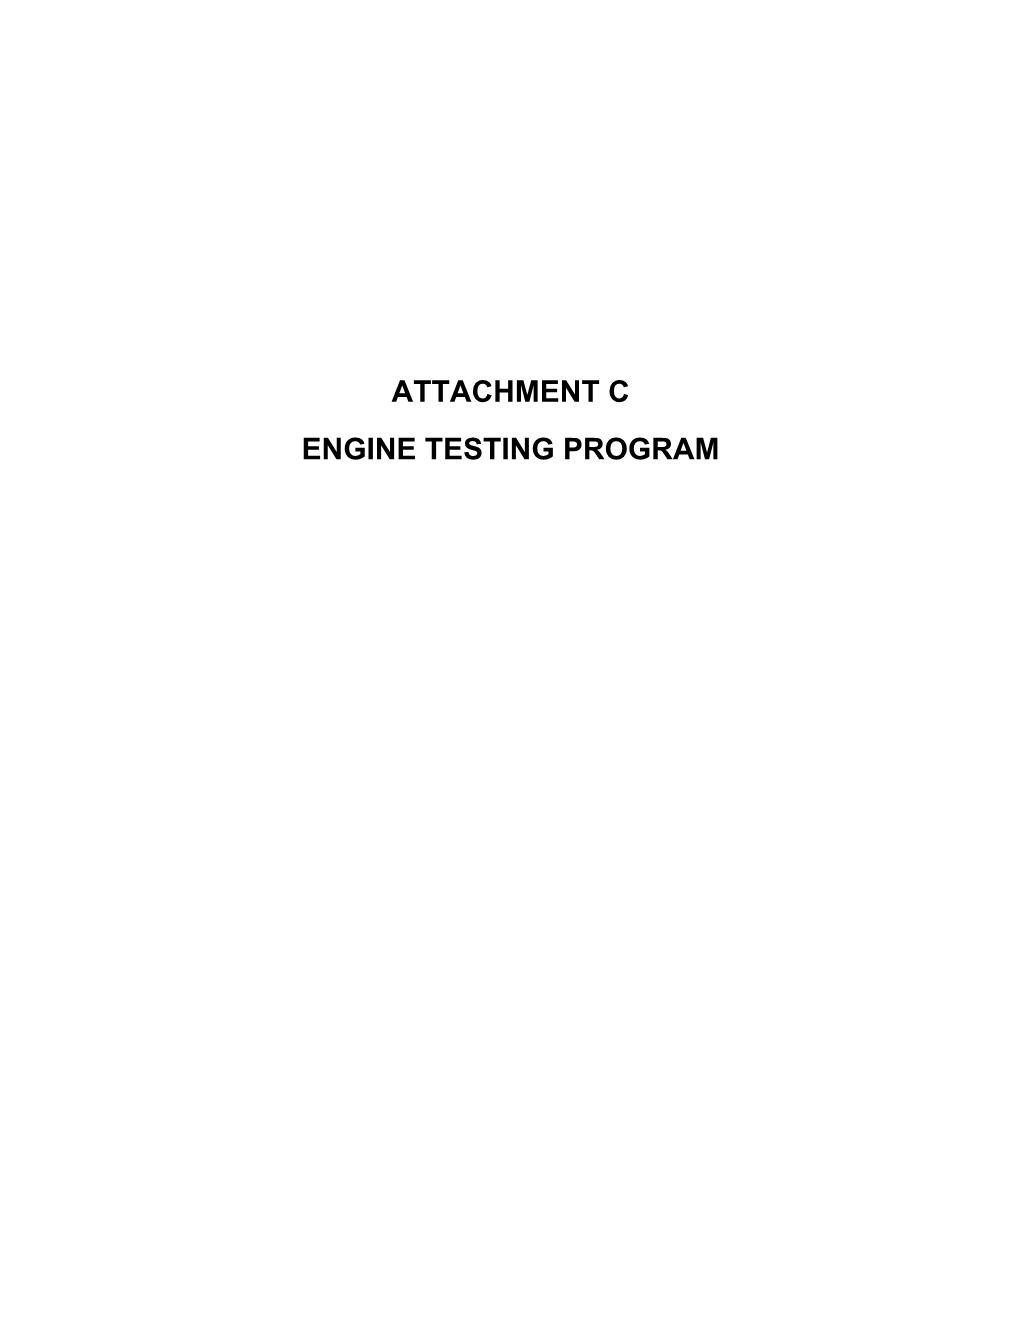 Engine Testing Program